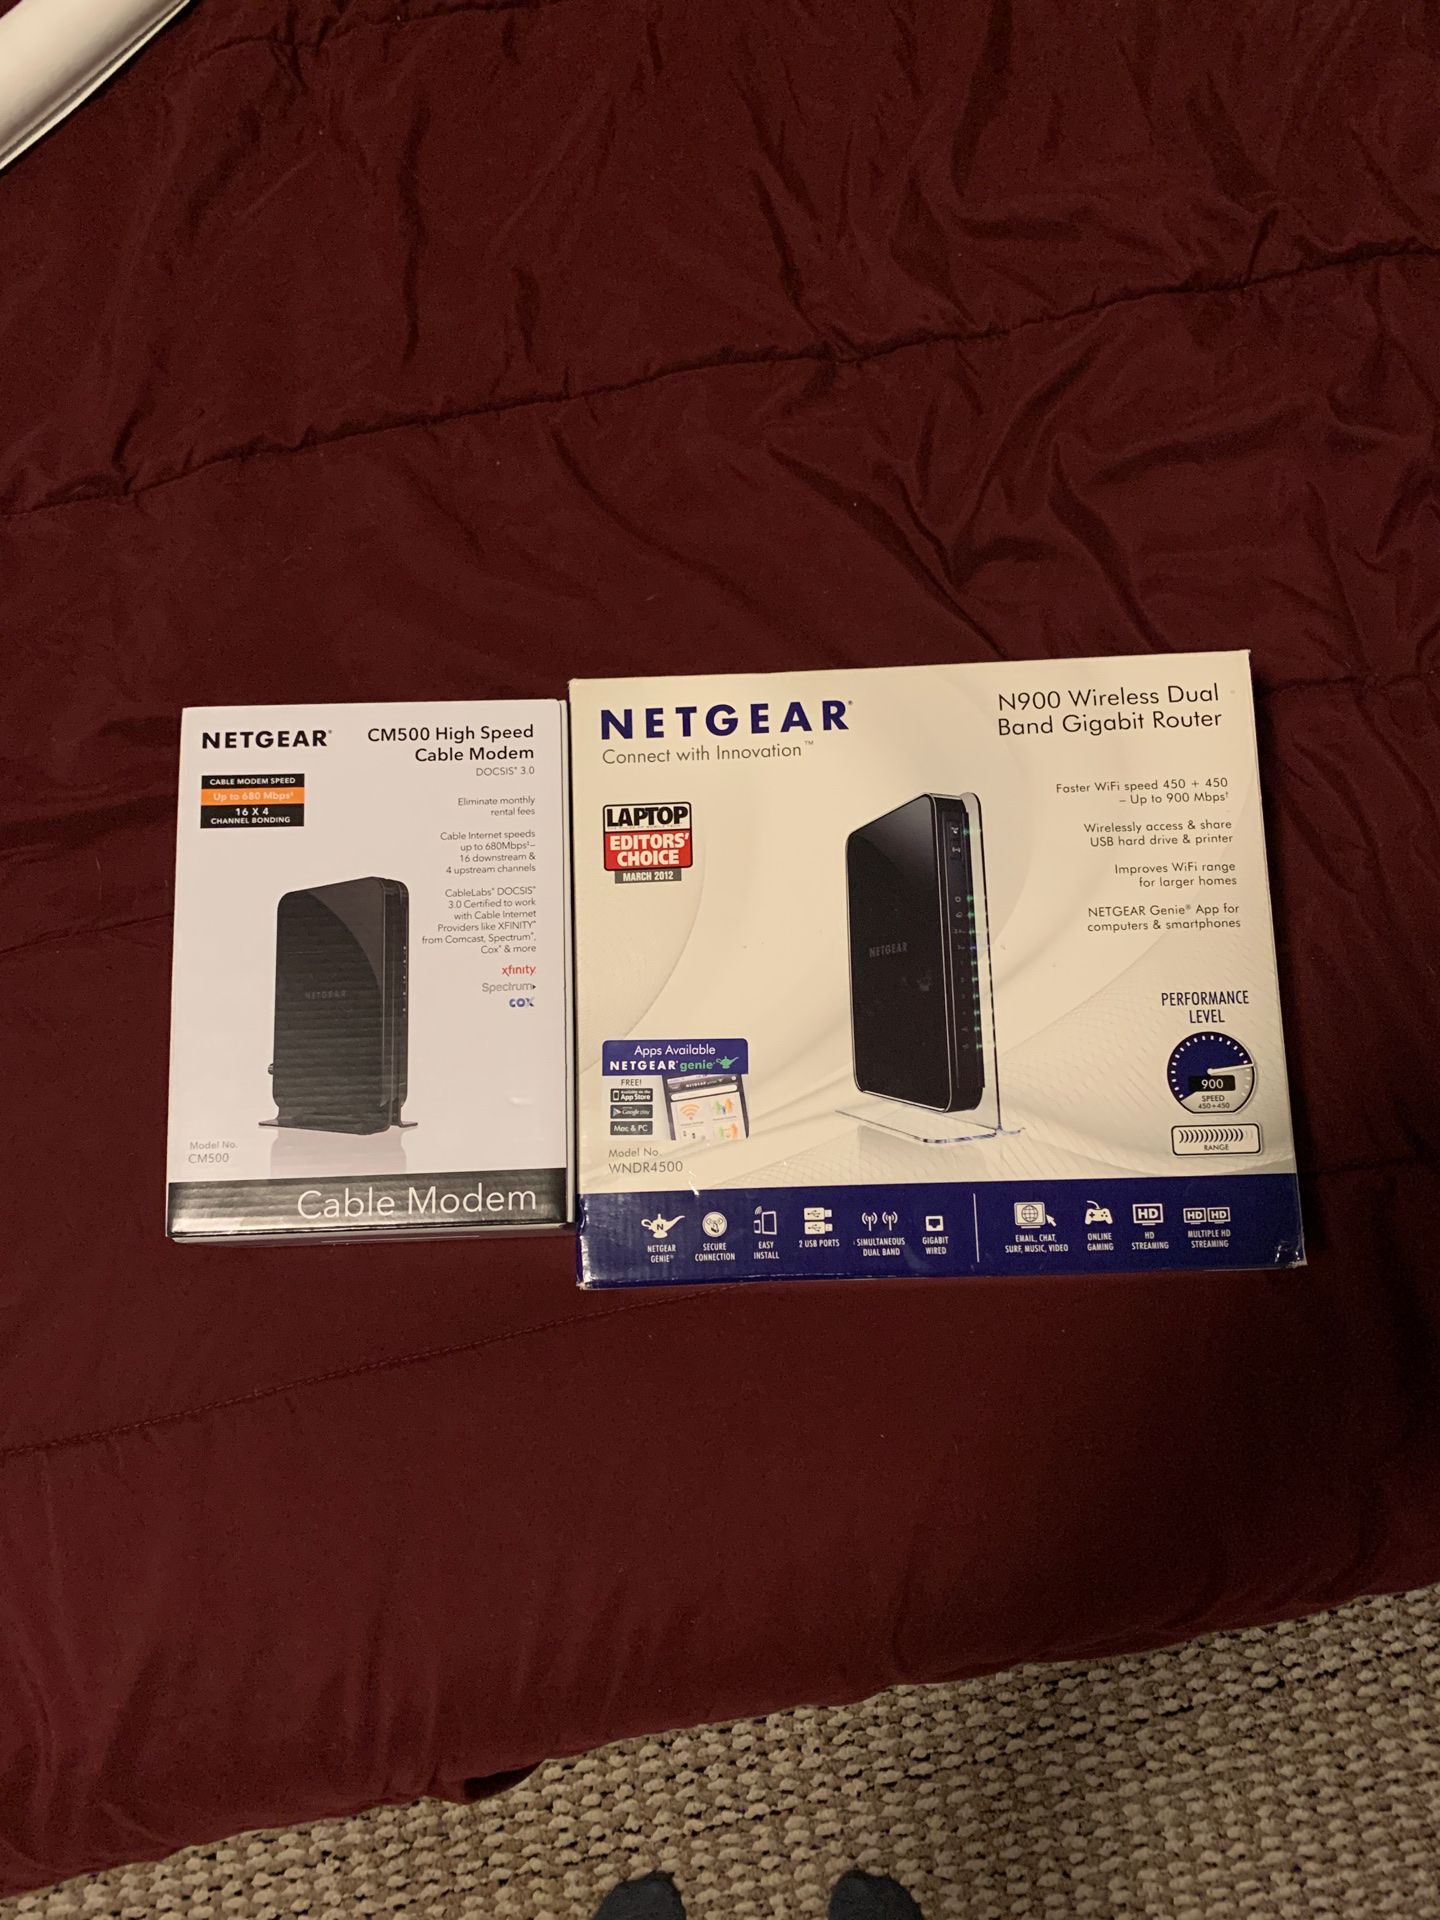 Netgear CM500 High Speed Cable Modem (DOCSIS 3.0) and Netgear N990 Wireless Dual Band Gigabit Router